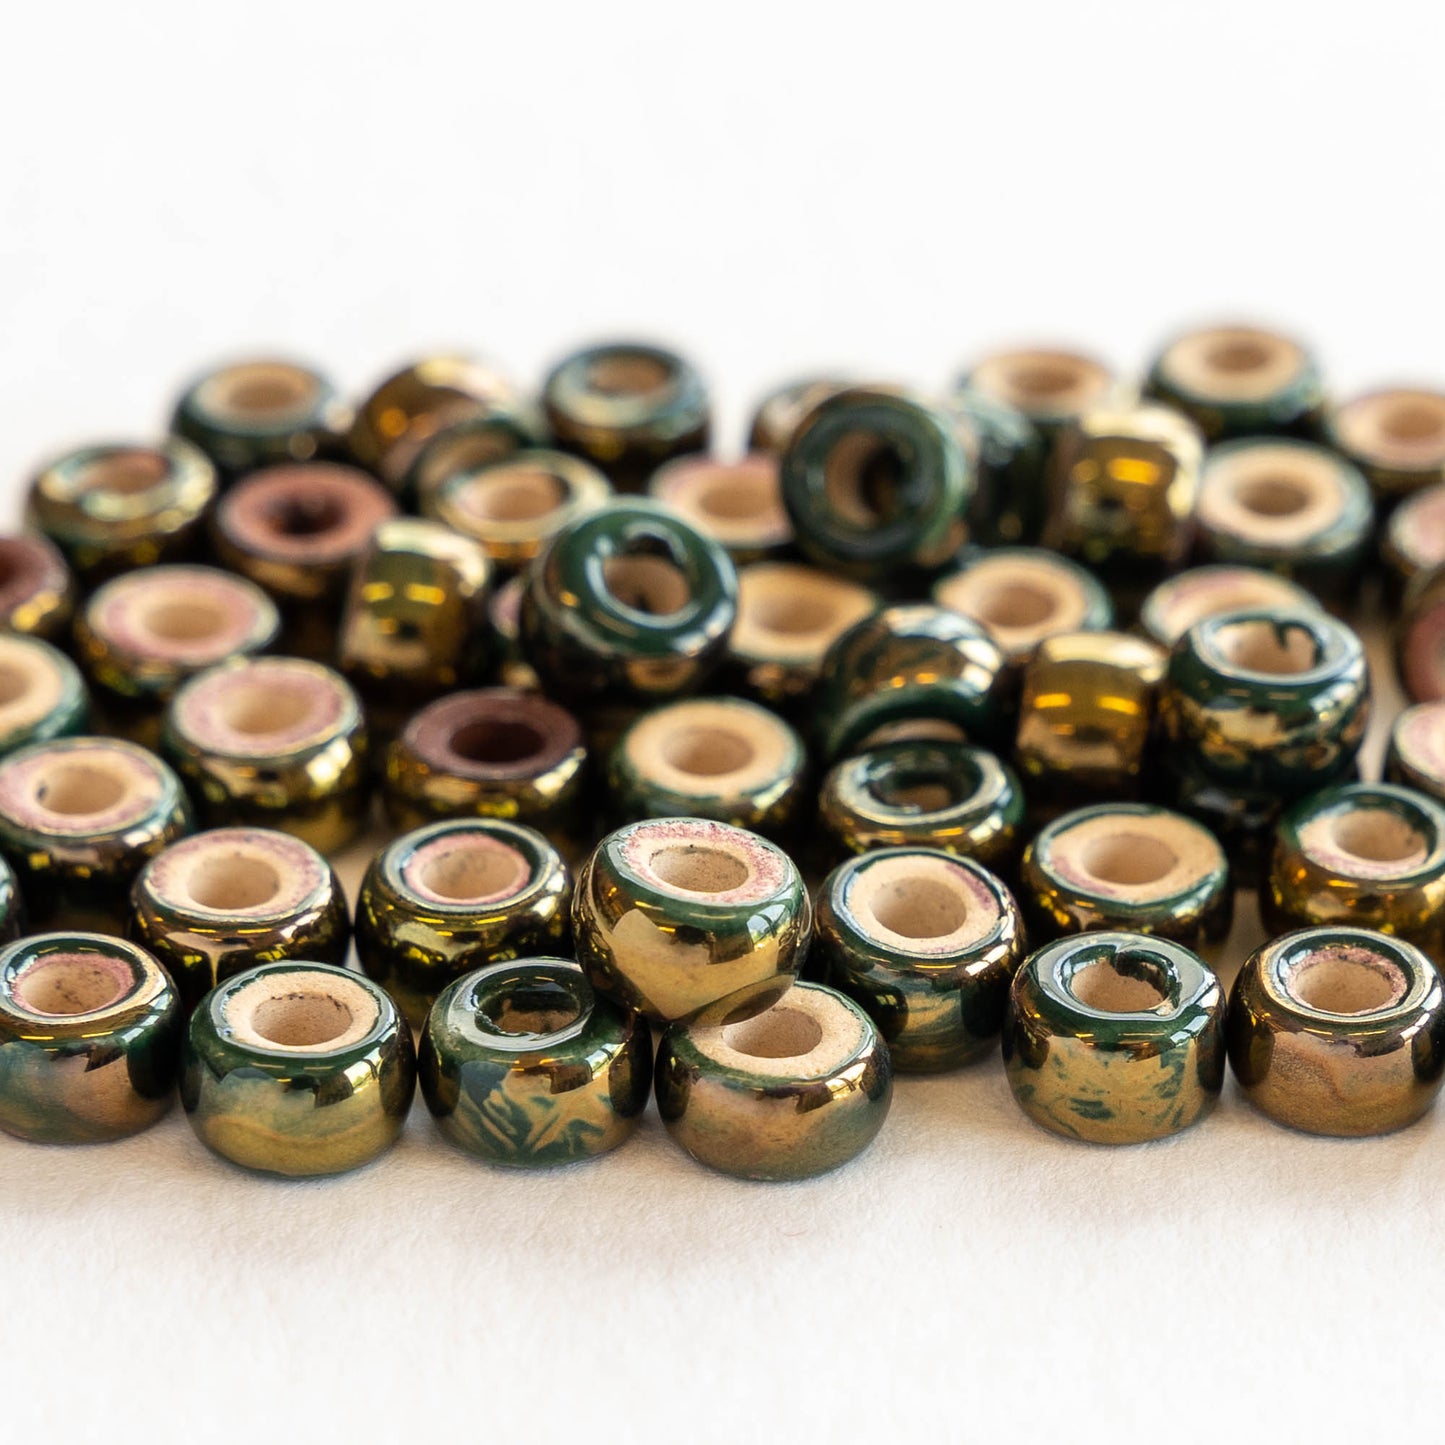 4x6mm Glazed Ceramic Tube Beads - Forest Green & Gold - 10 or 30